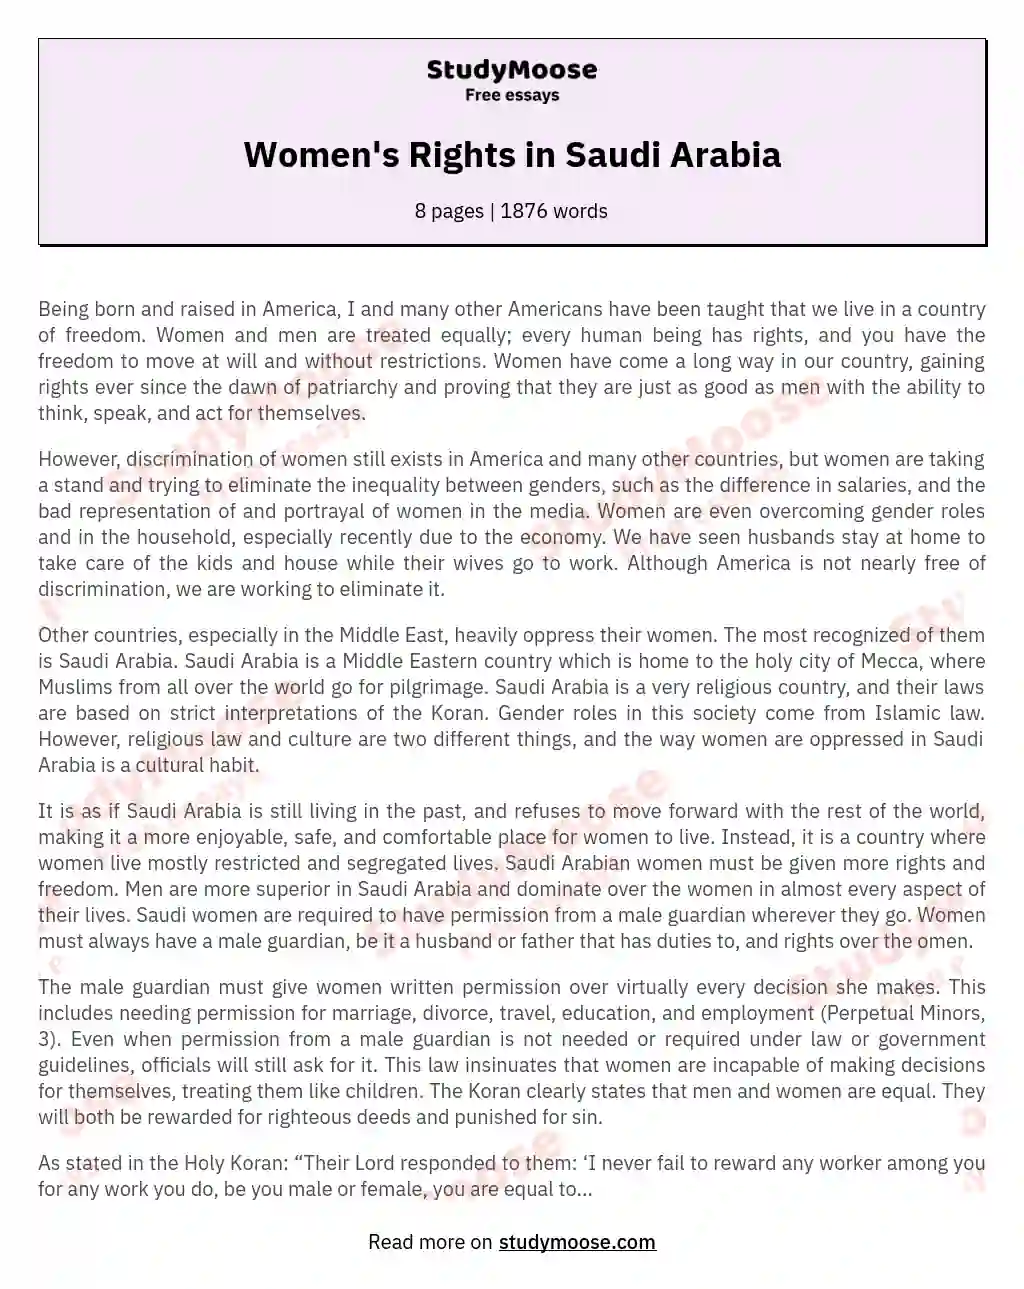 Women's Rights in Saudi Arabia essay